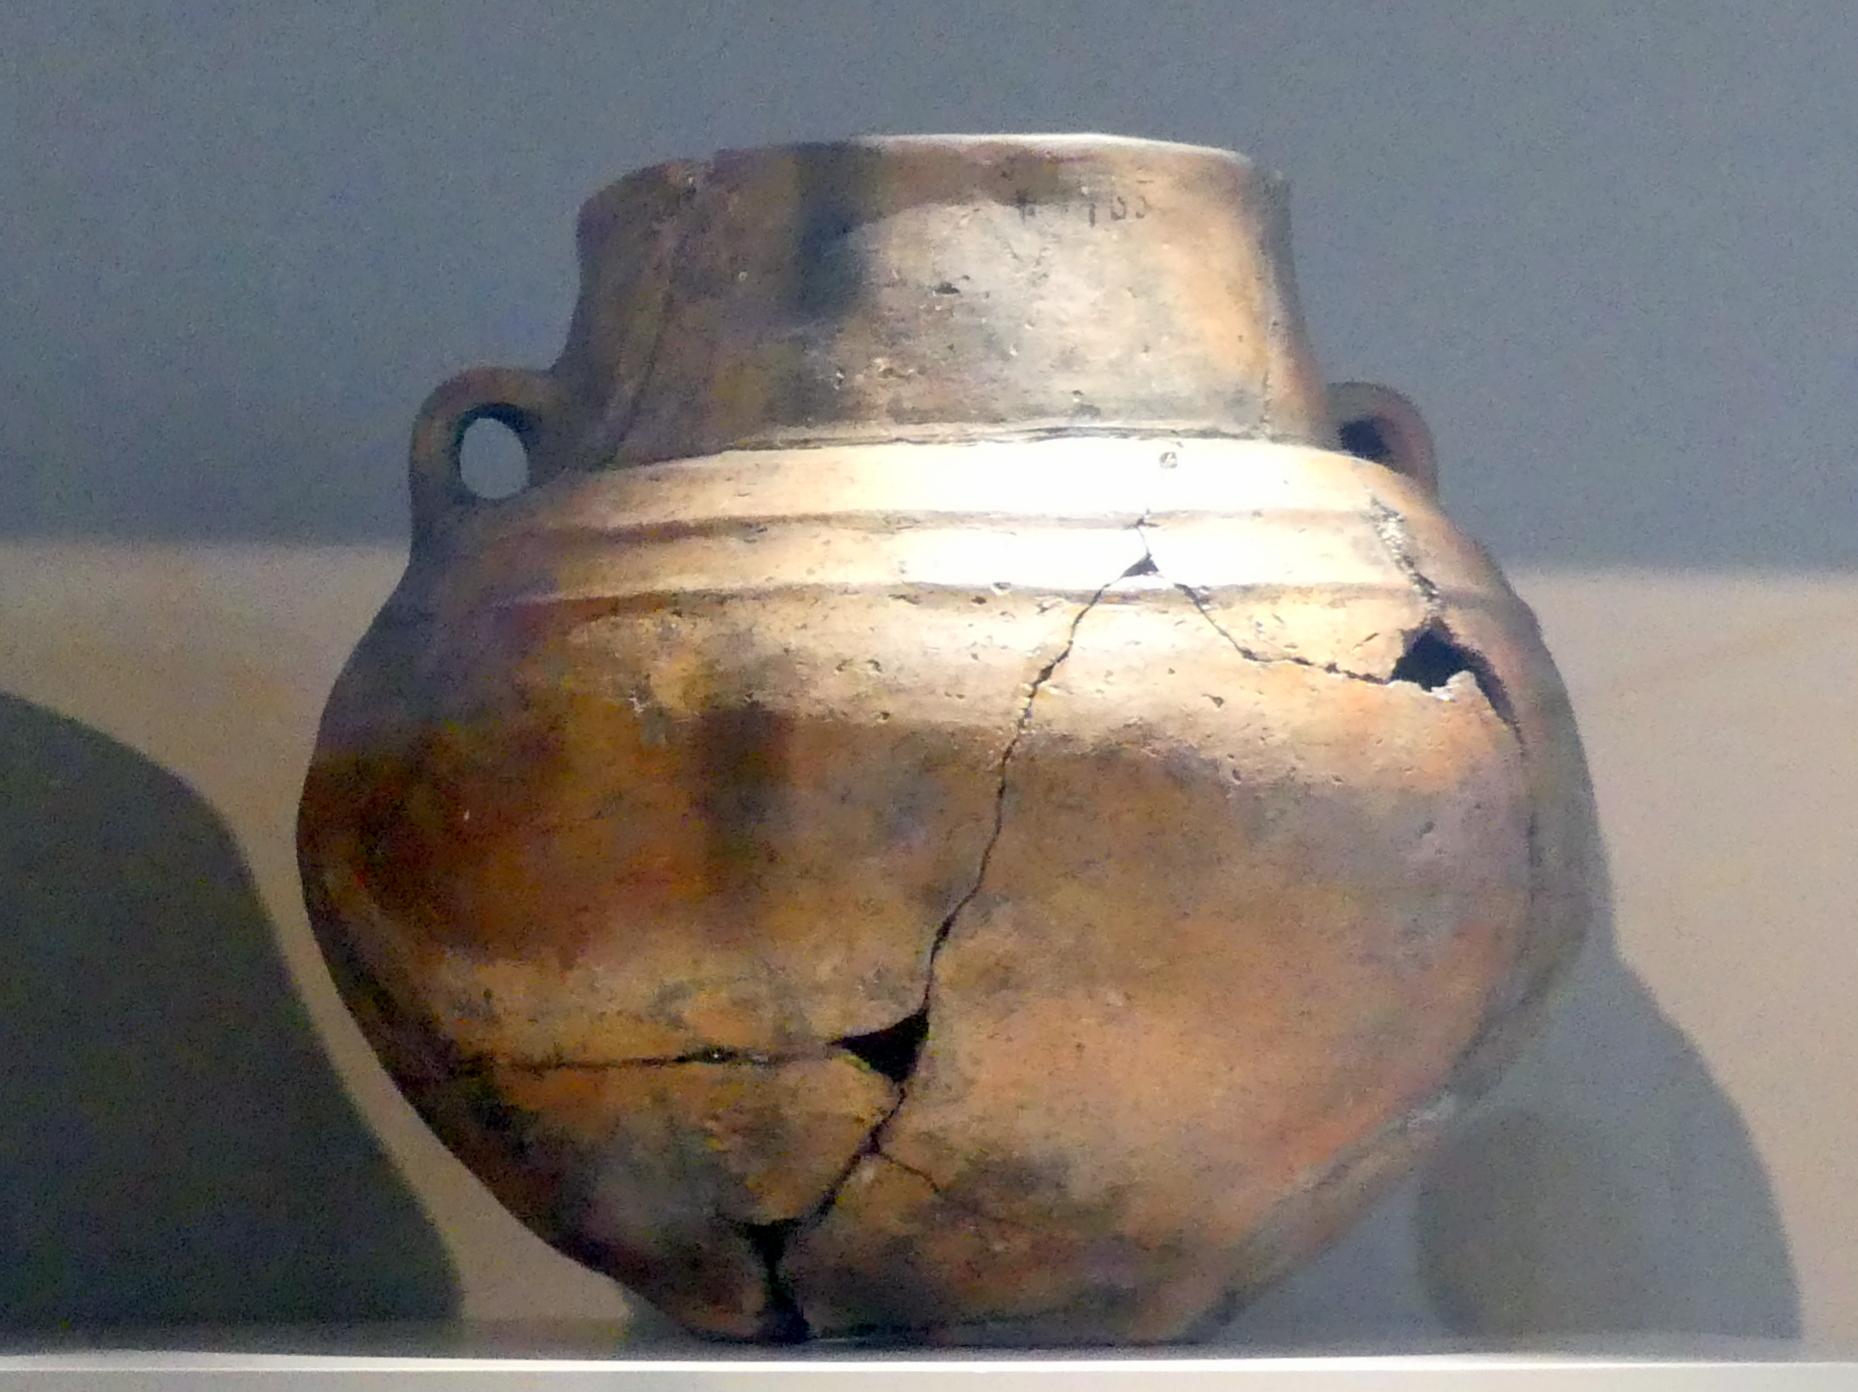 Topf mit horizontaler Kannelur, 900 - 600 v. Chr., Bild 1/2